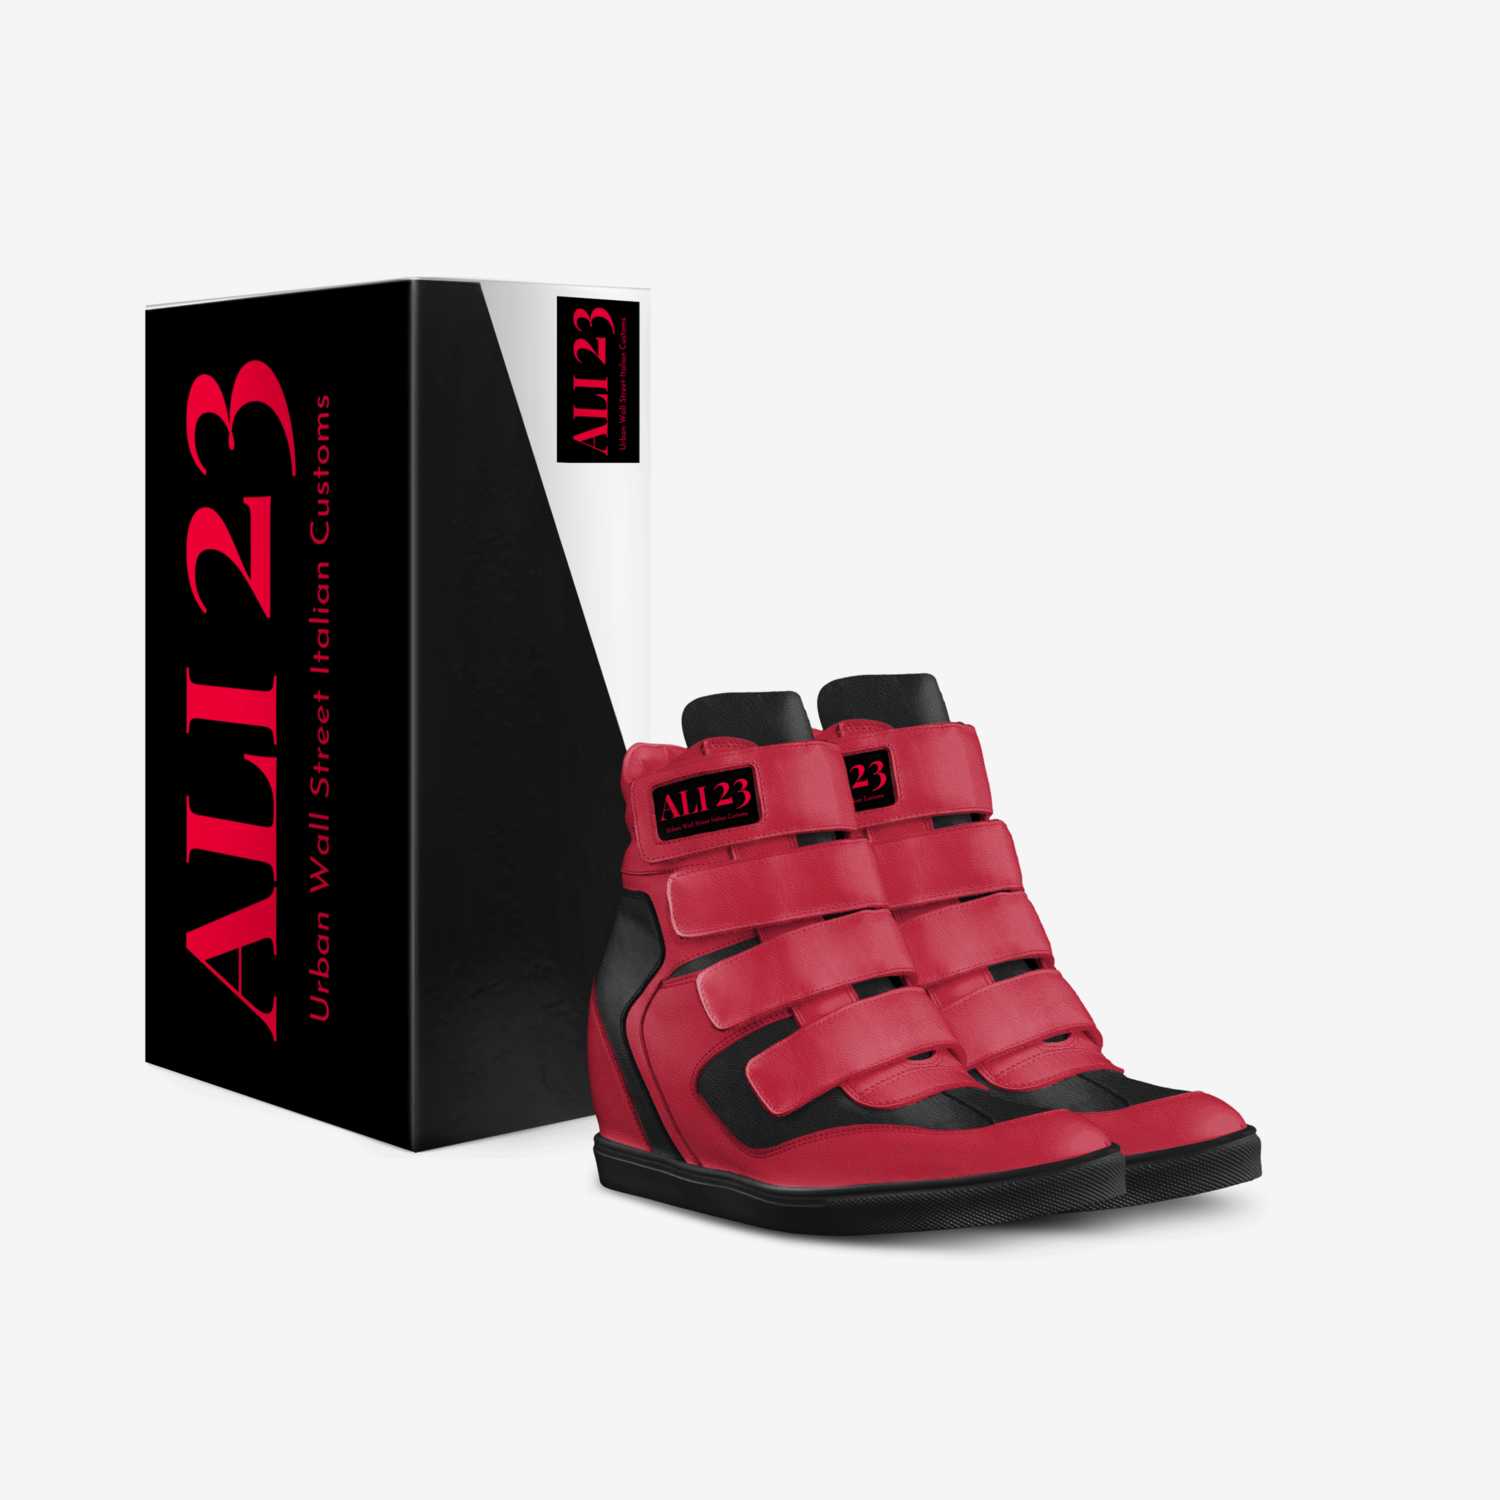 ALI 23 custom made in Italy shoes by Urbanwallstreet Earl | Box view